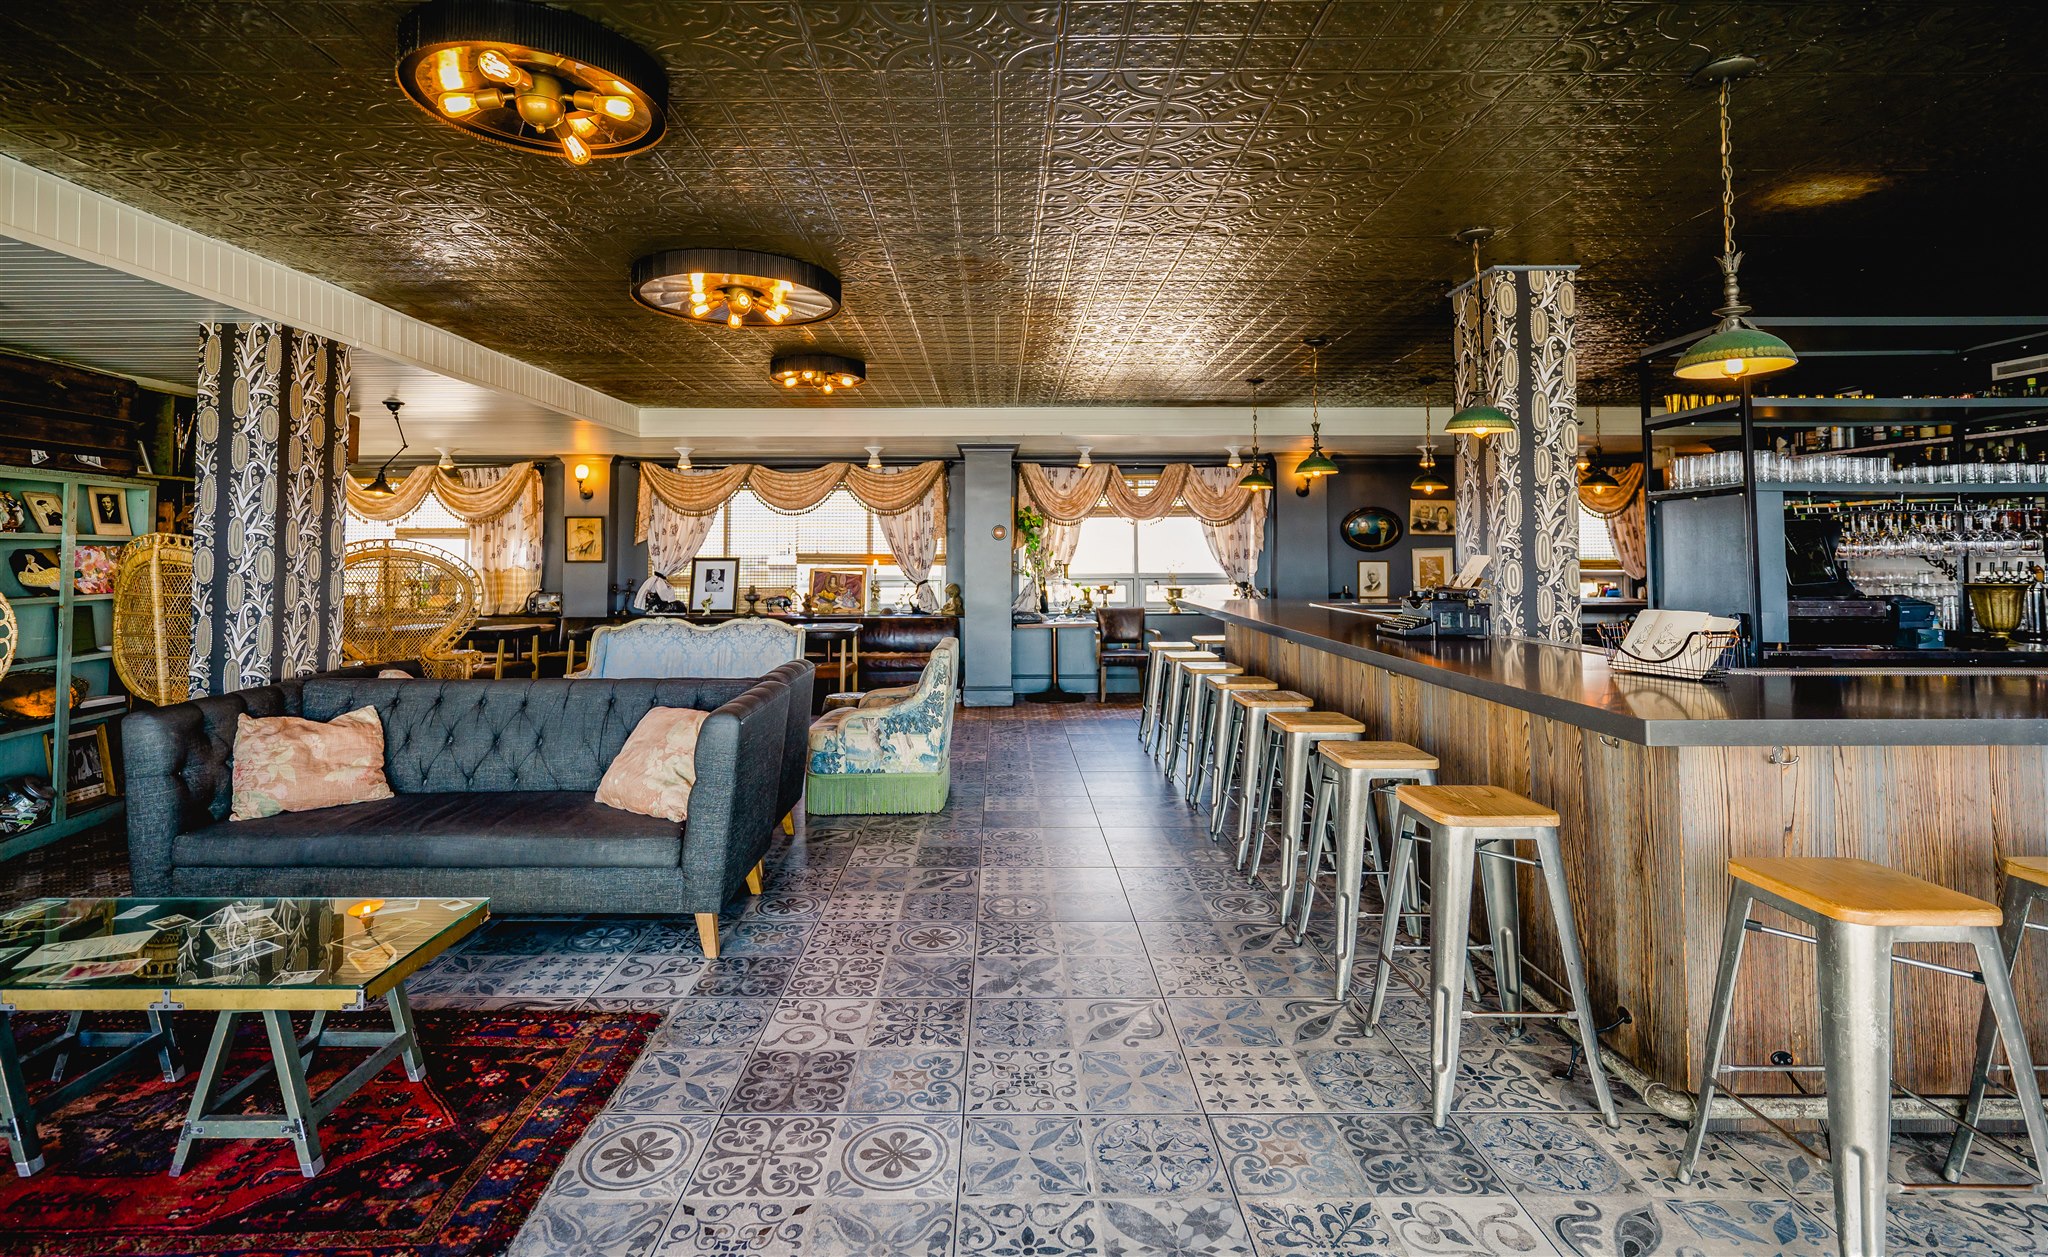 Pontchartrain Hotel bar with mosaic tile